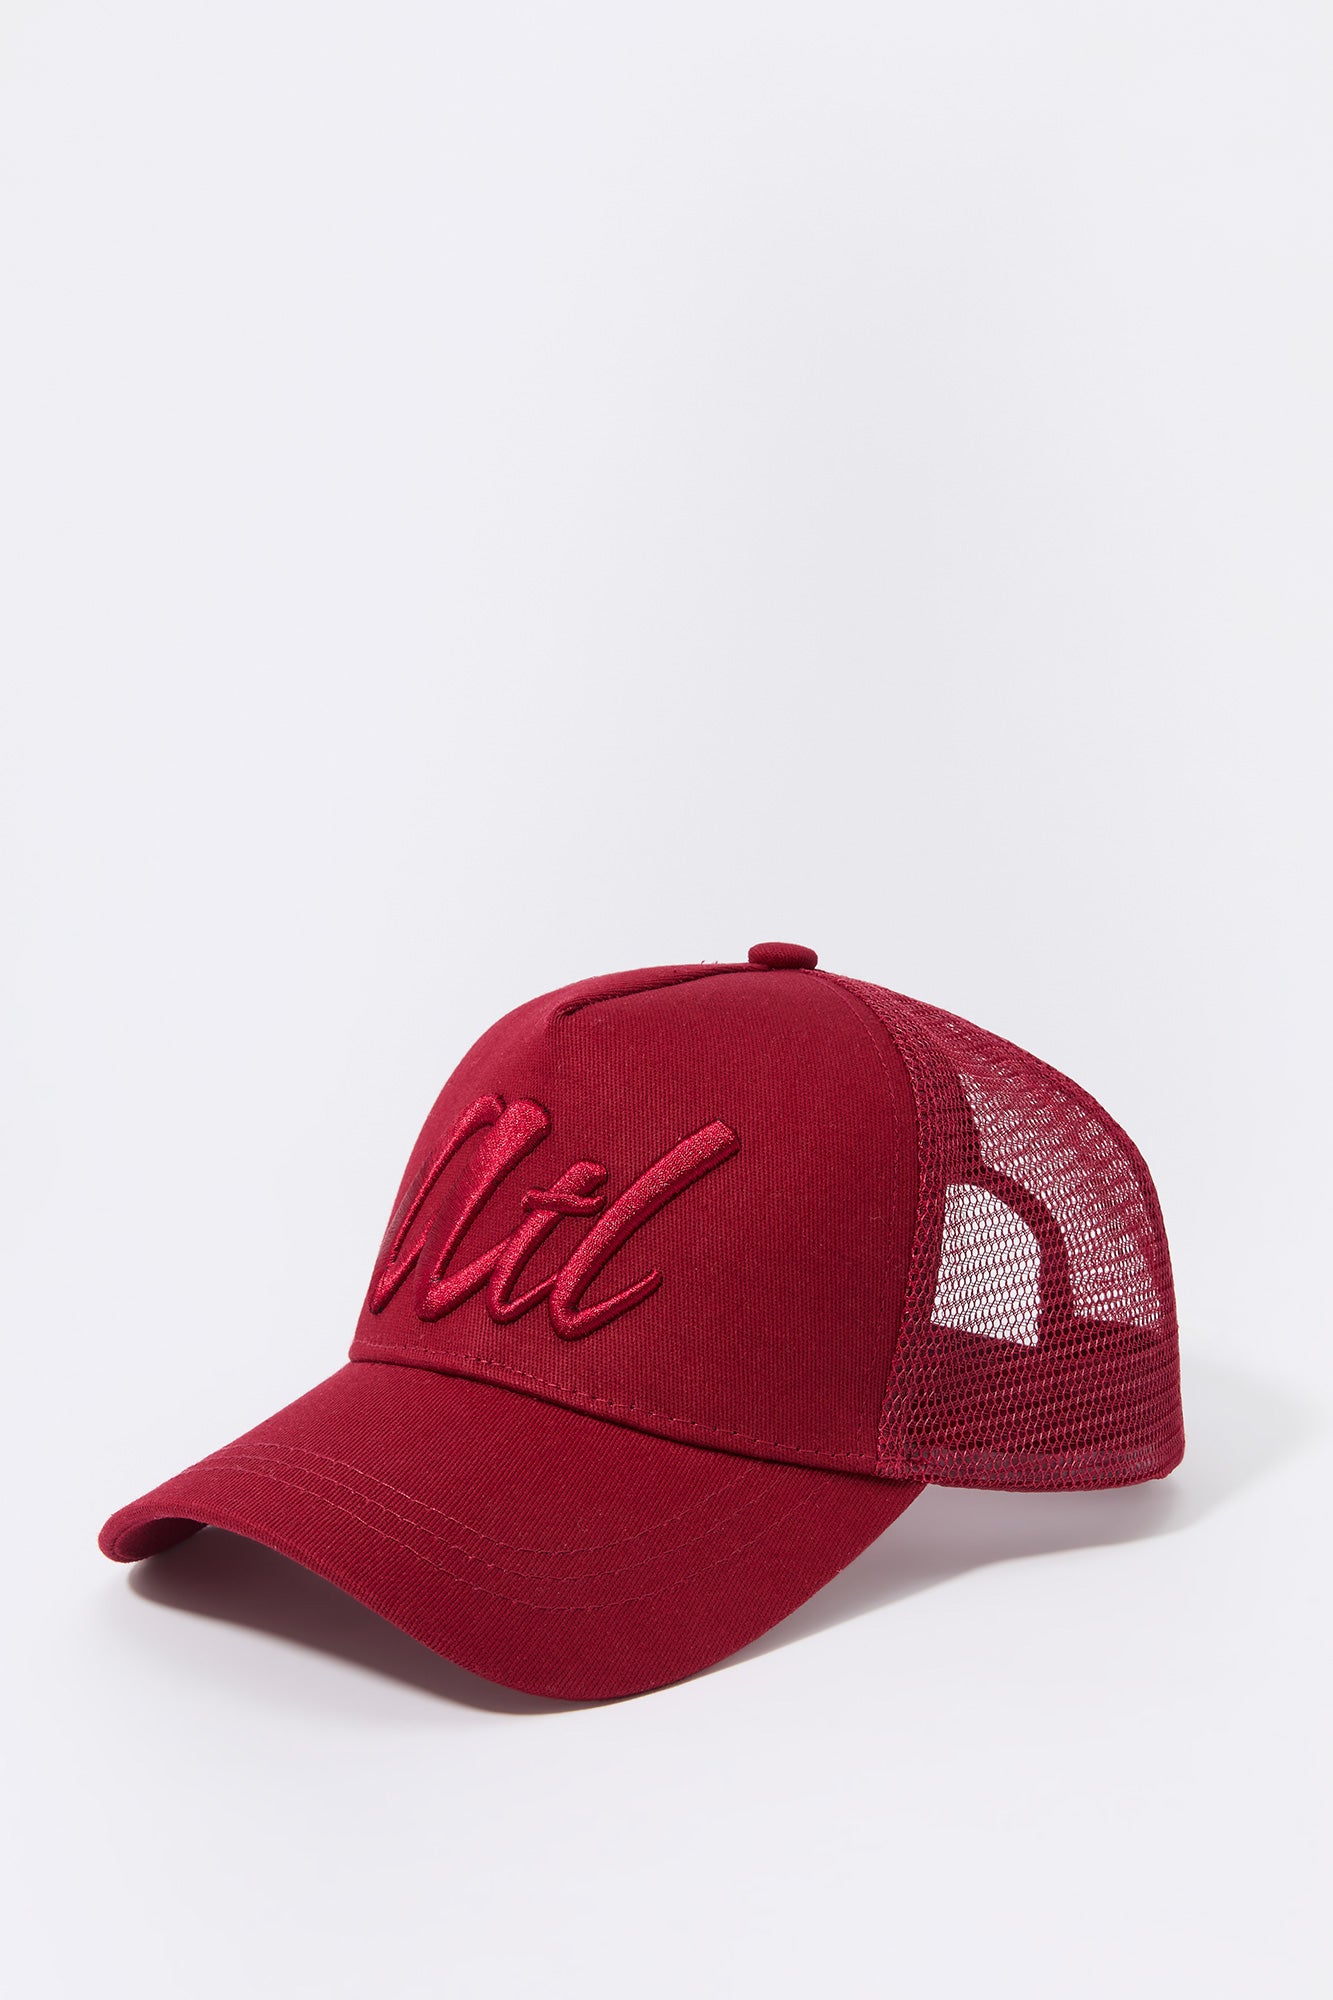 ATL Embroidered Mesh Baseball Hat